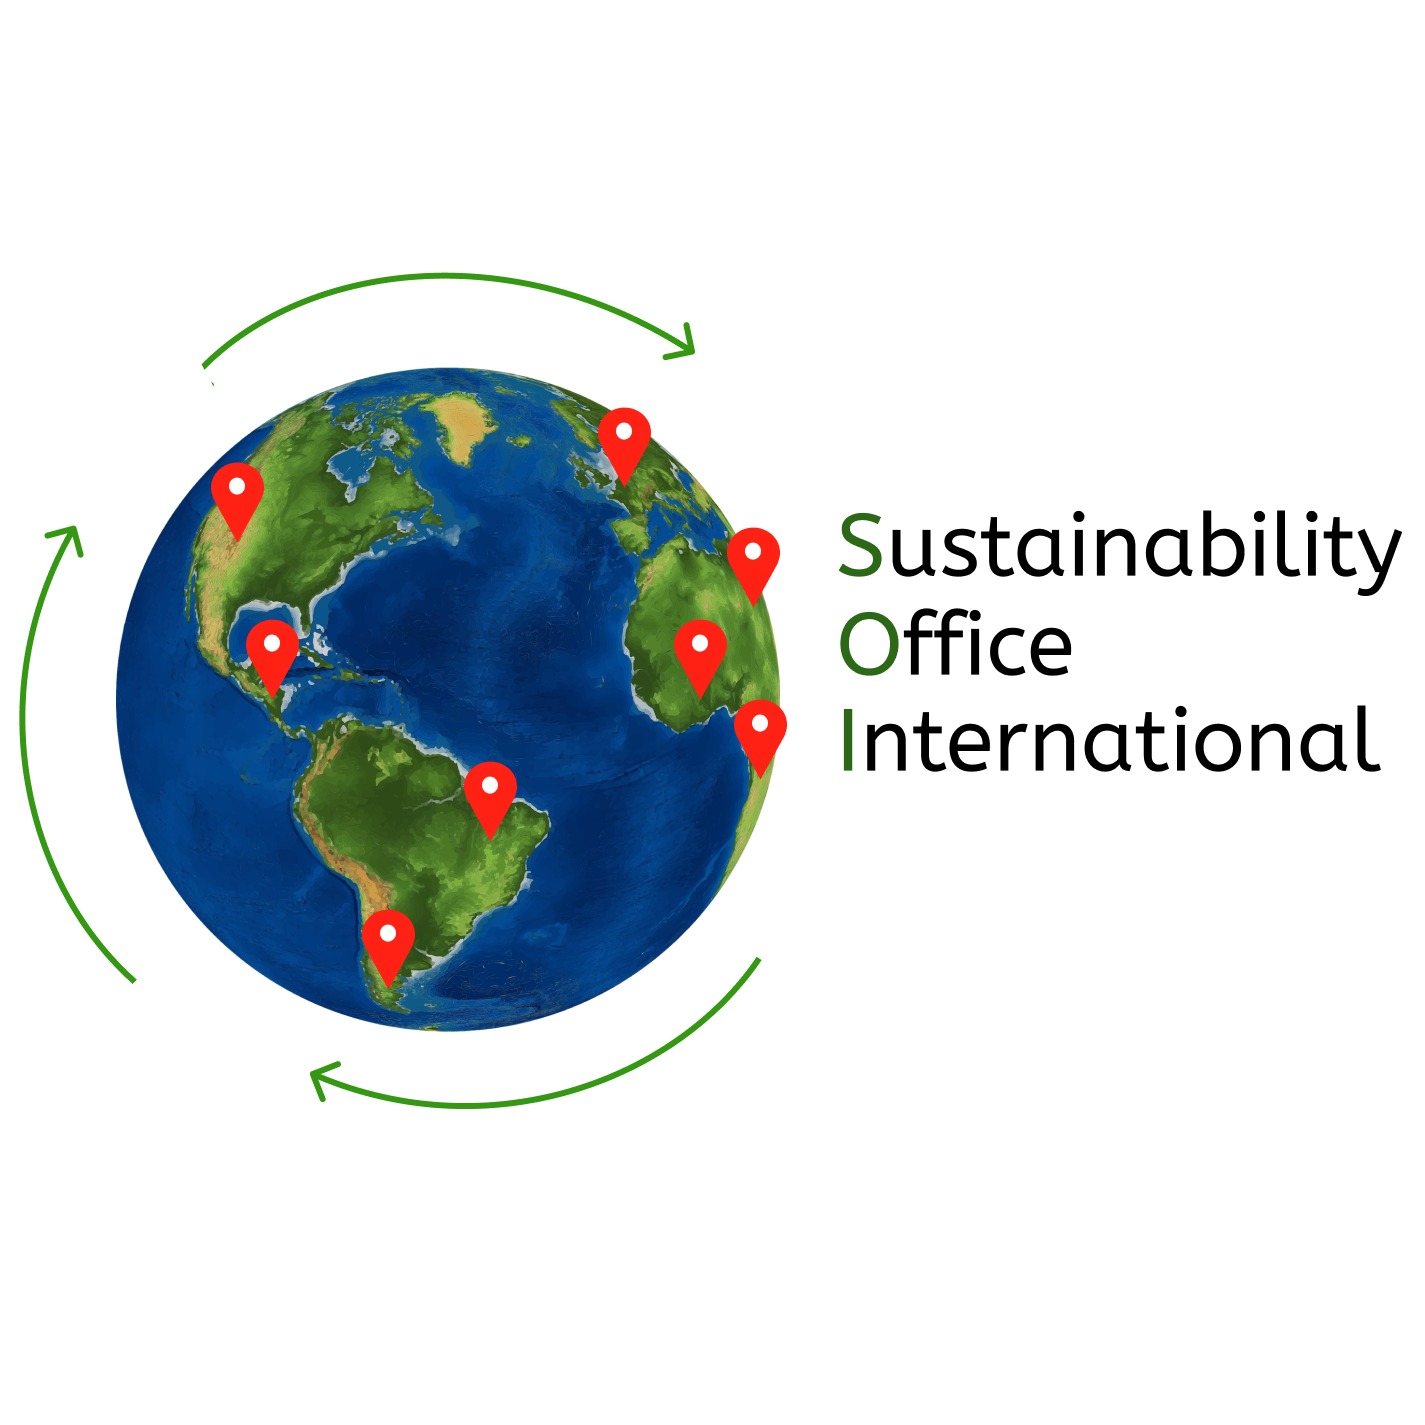 Sustainability Office International(1)